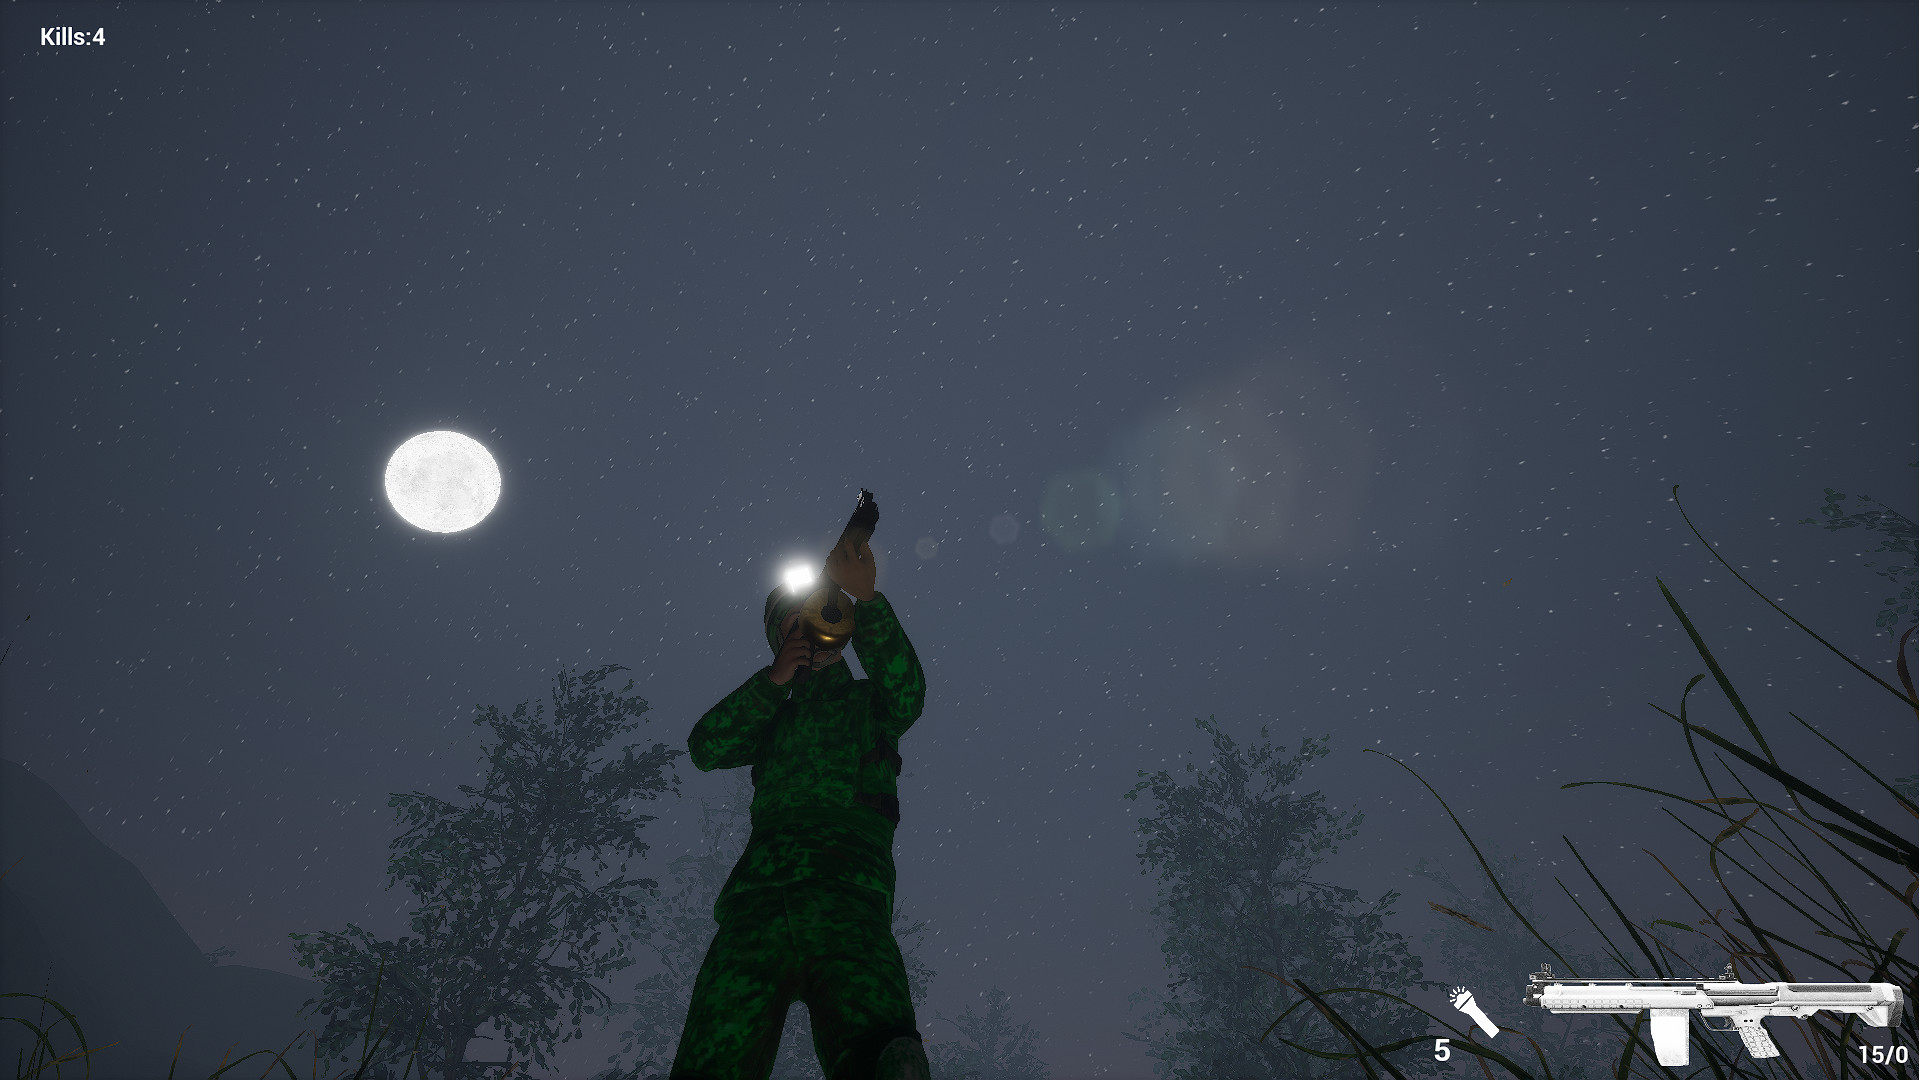 Soldier in the darkness screenshot